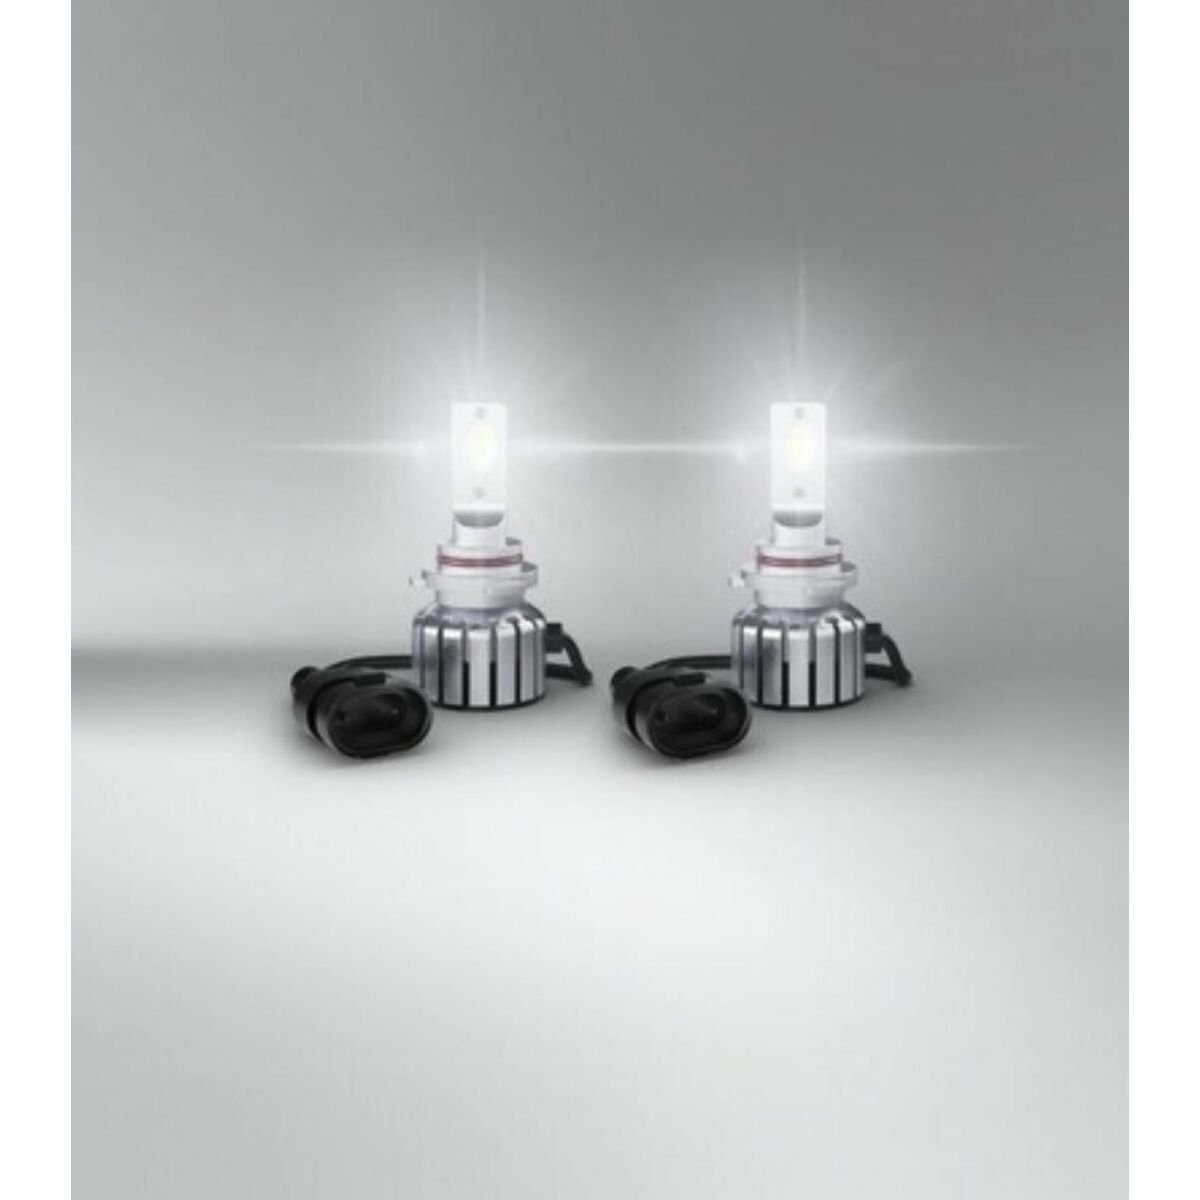 Lâmpada para carro Osram LEDriving HL H10 HIR1 HB3 19 W 12 V 6000 K